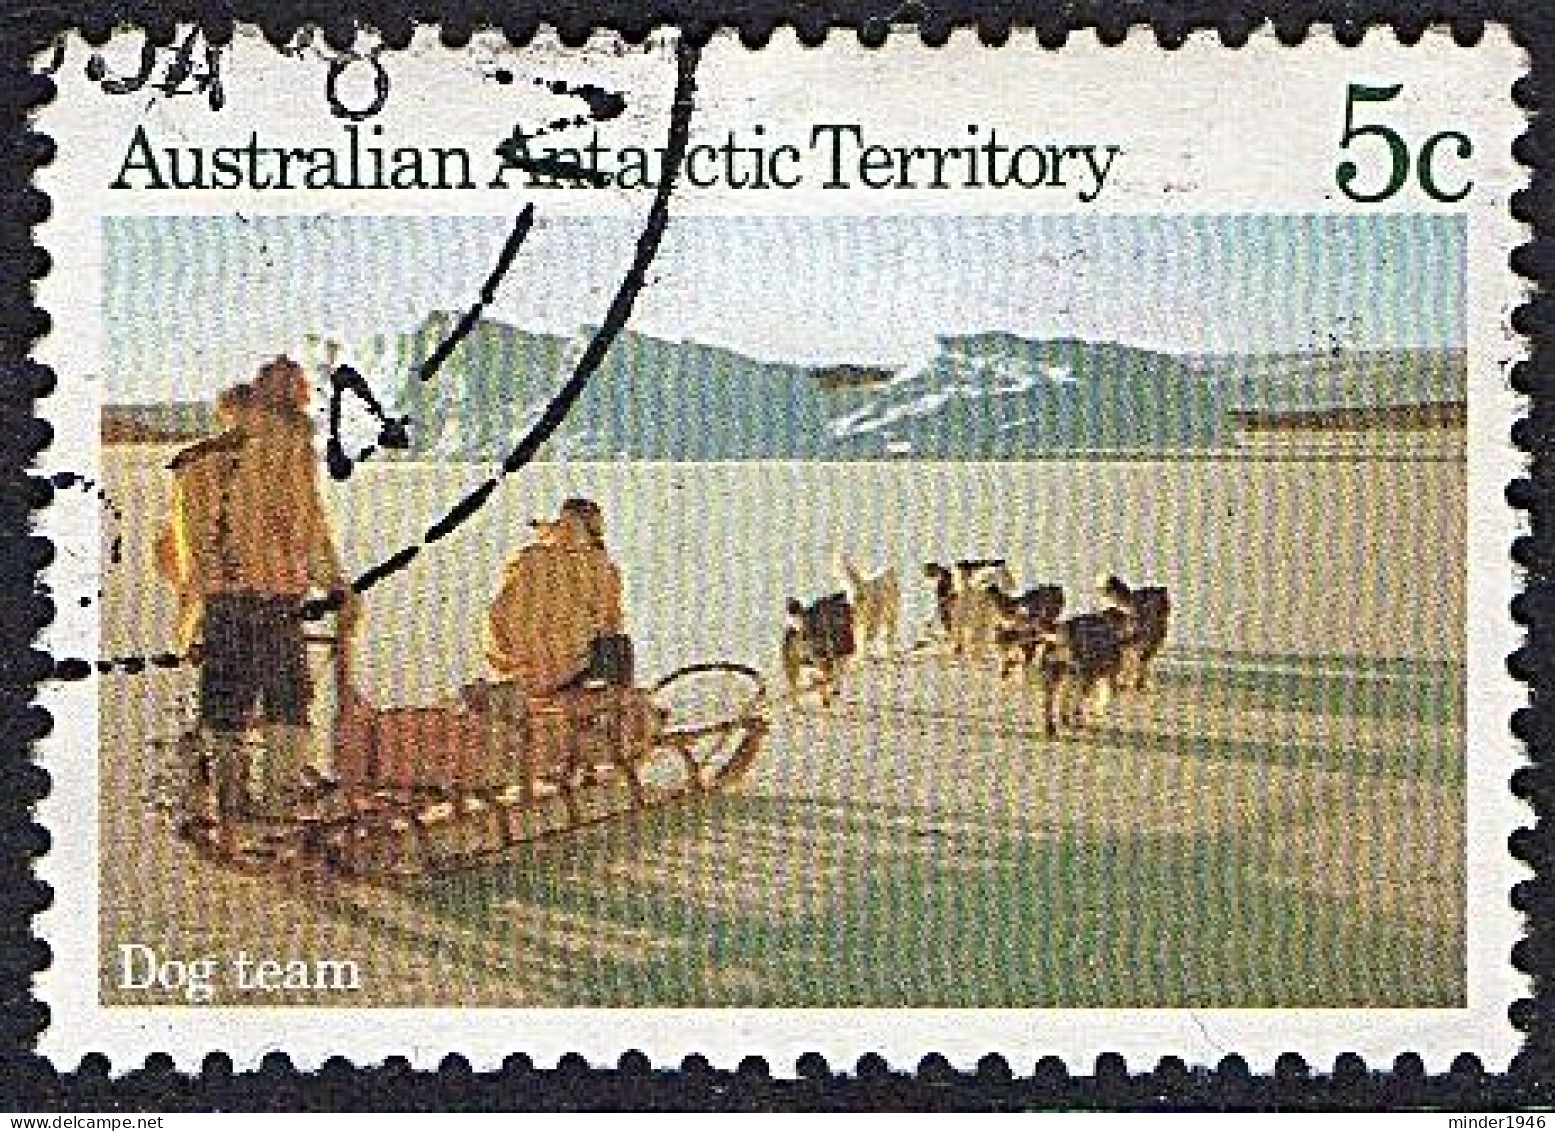 AUSTRALIAN ANTARCTIC TERRITORY (AAT) 1984 QEII 5c Multicoloured, Scenes-Dog Team SG64 FU - Oblitérés